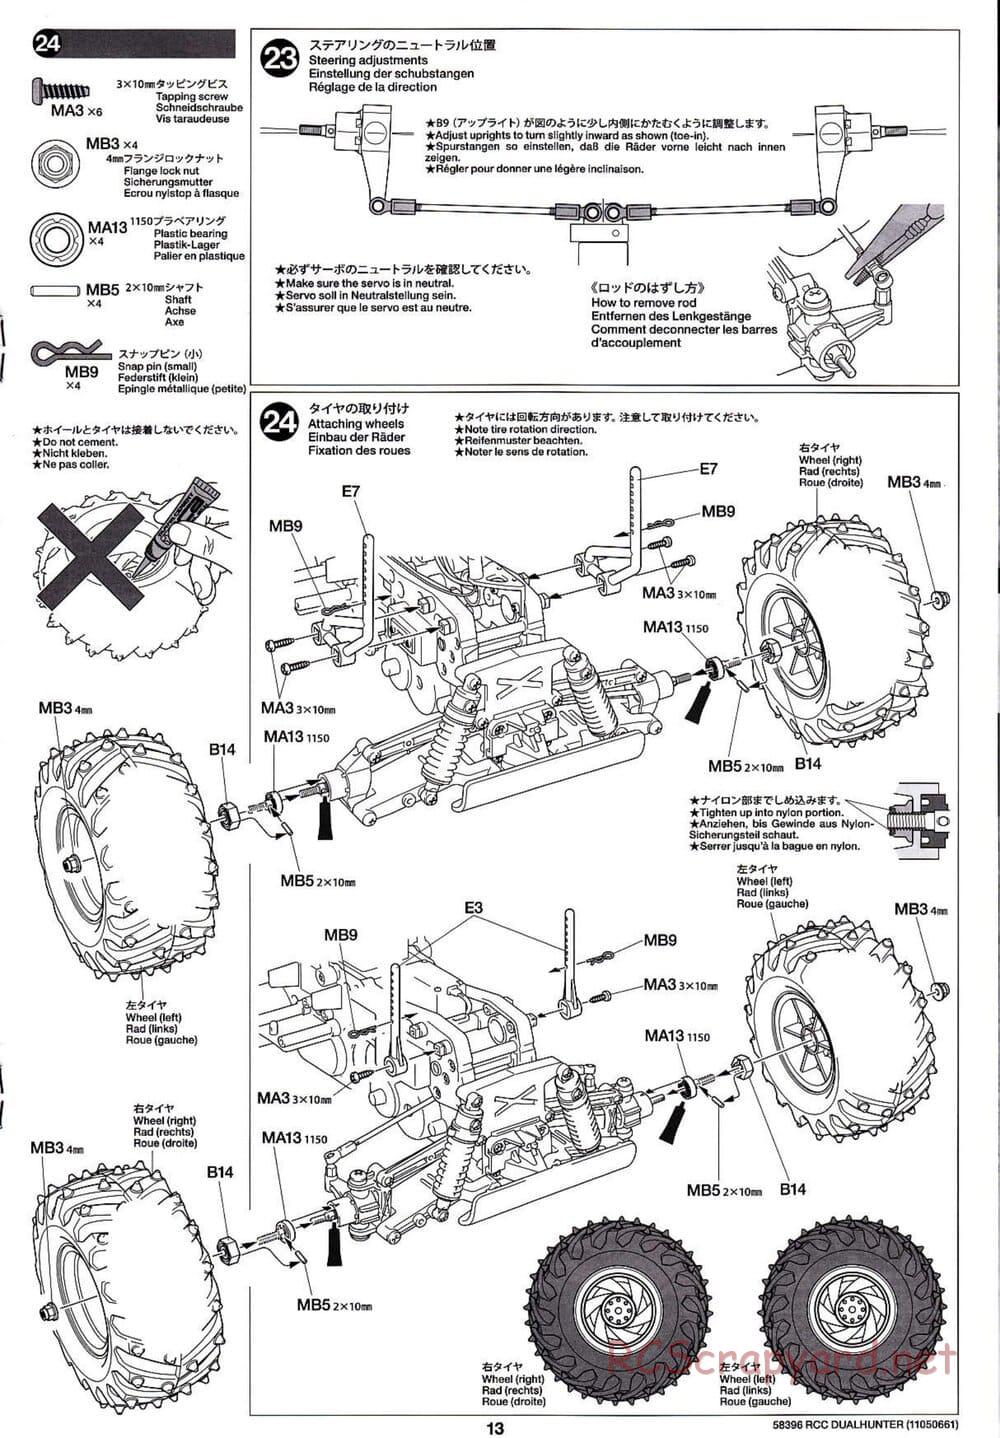 Tamiya - Dualhunter - WR-01 Chassis - Manual - Page 13